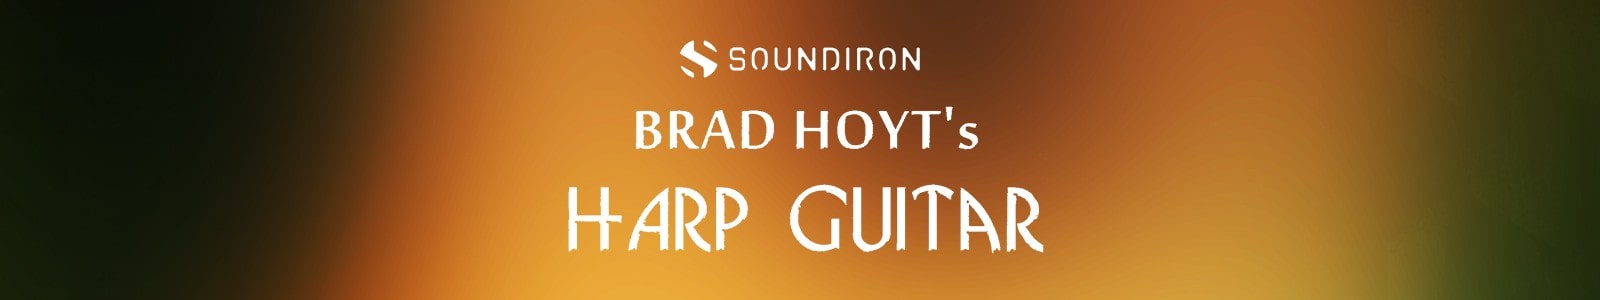 Soundiron Brad Hoyt’s Harp Guitar